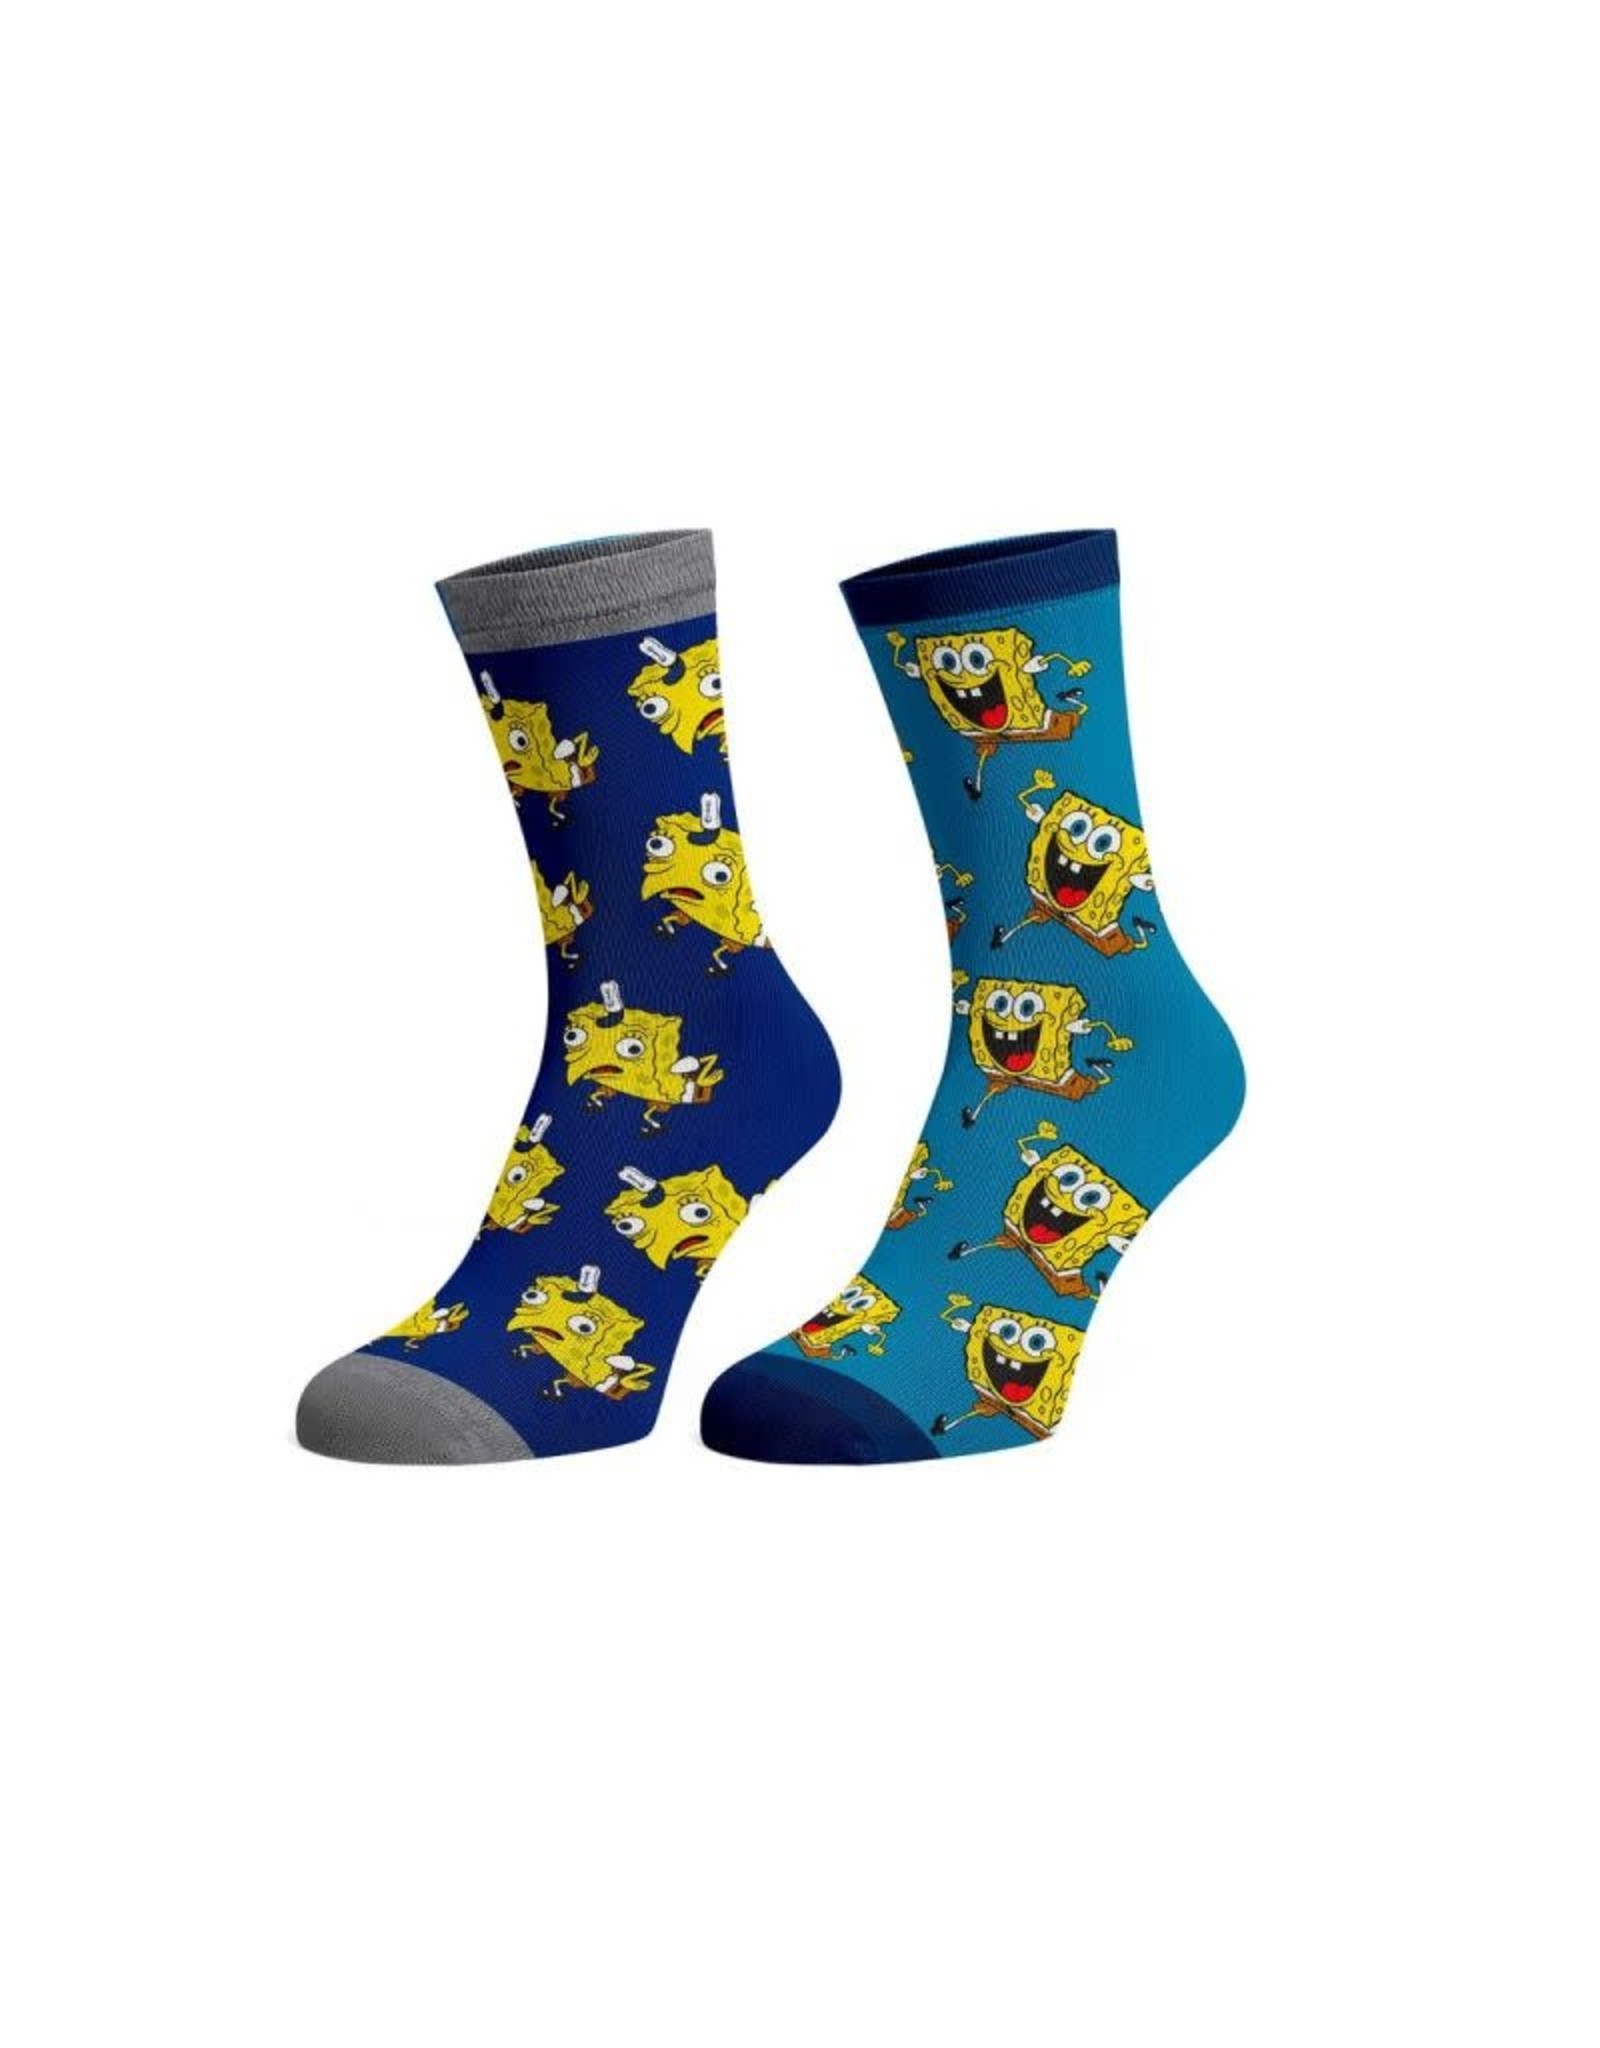 Spongebob - 2 Pack Crew Socks